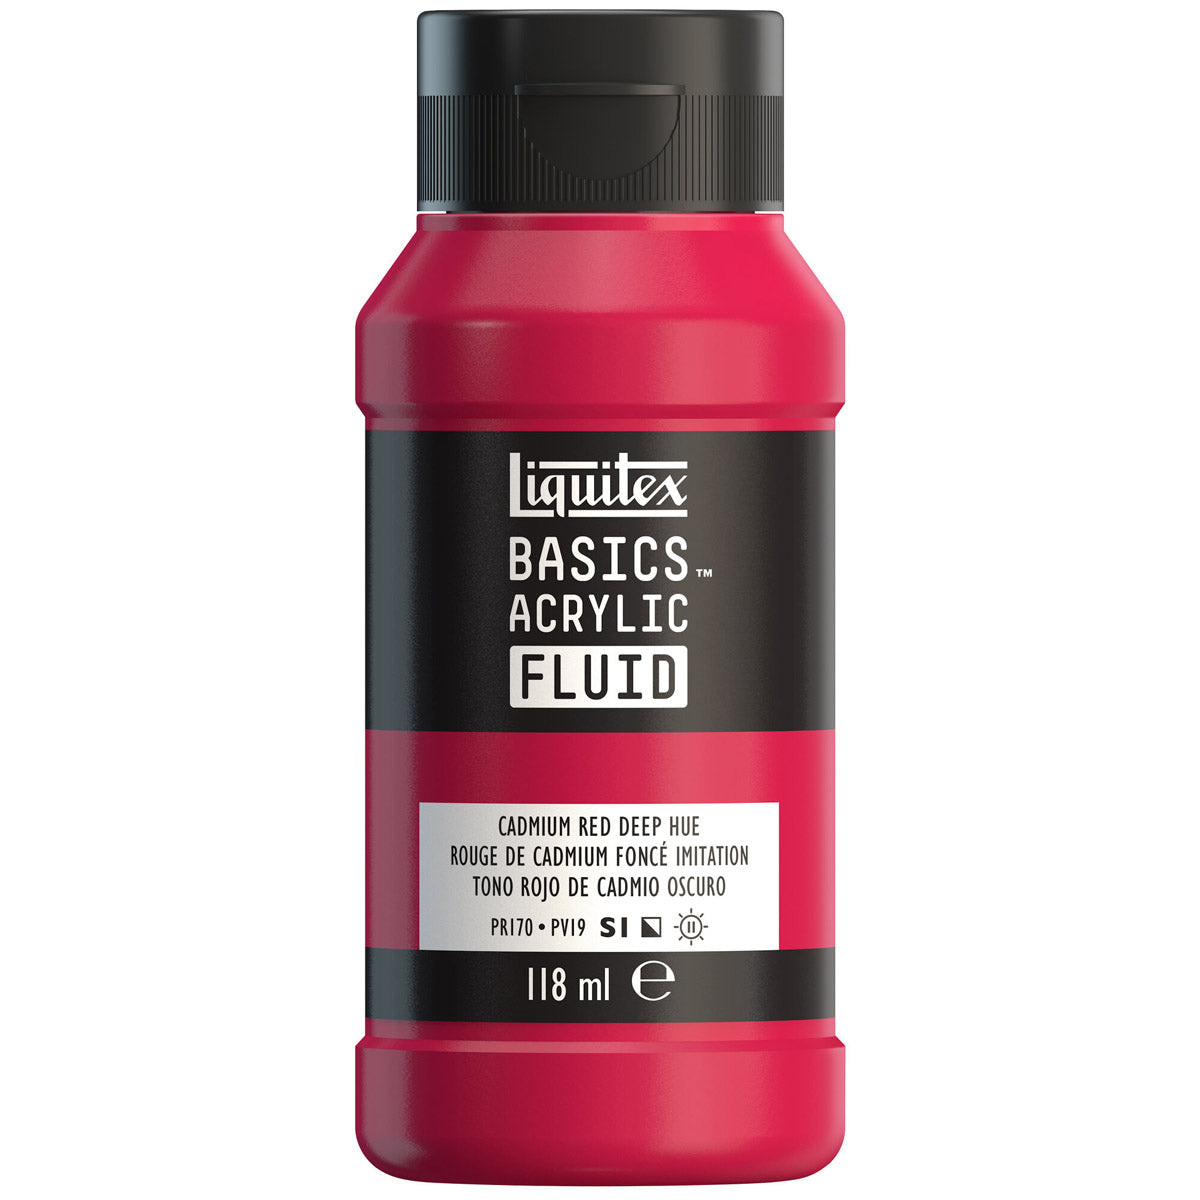 Liquitex Basics Fluid Acryl 118ml - Cadmium Red Deep Hue S1